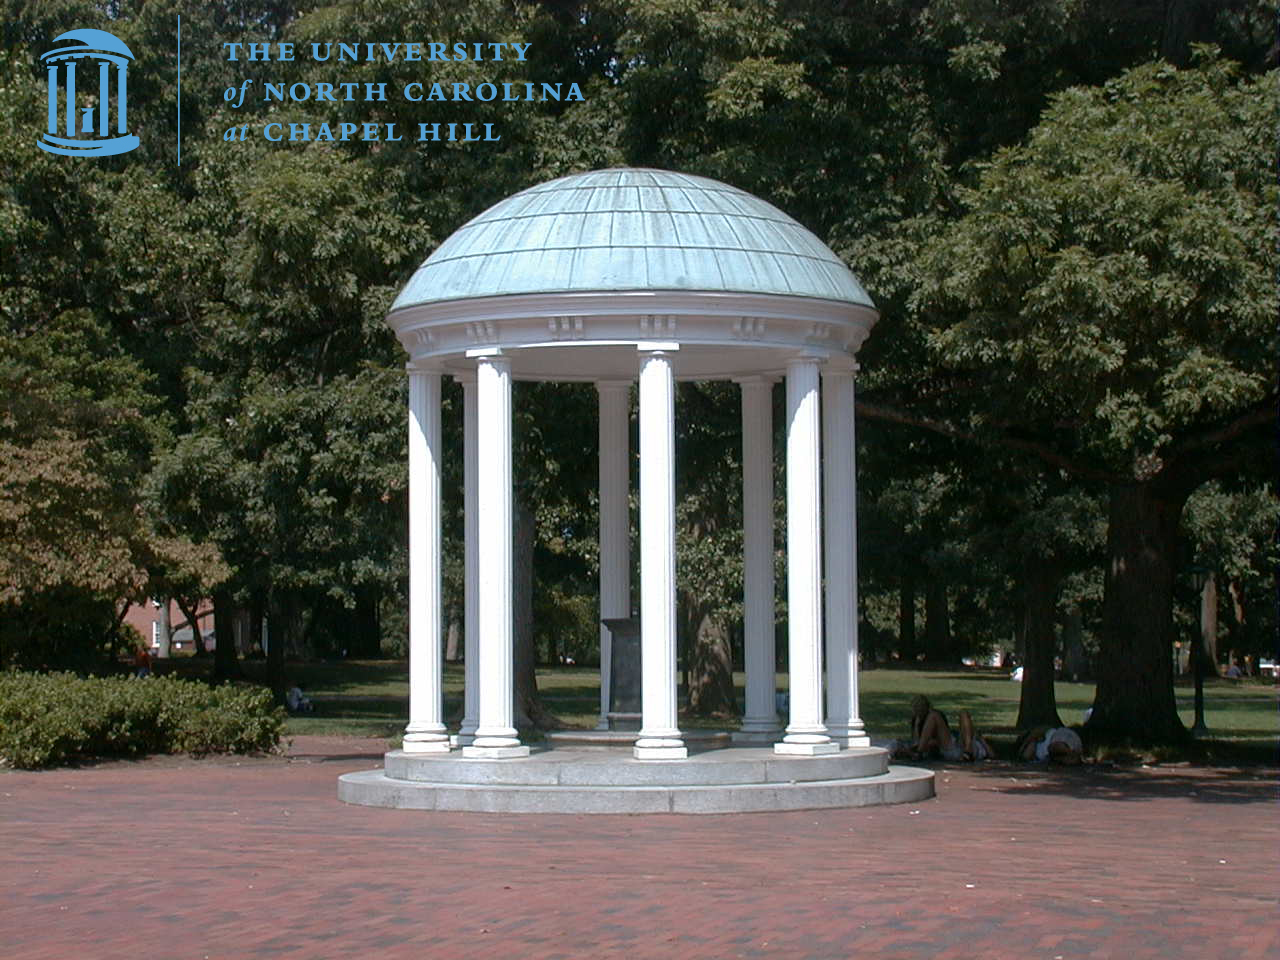 The Old Well at Univ. Of North Carolina at Chapel Hill.